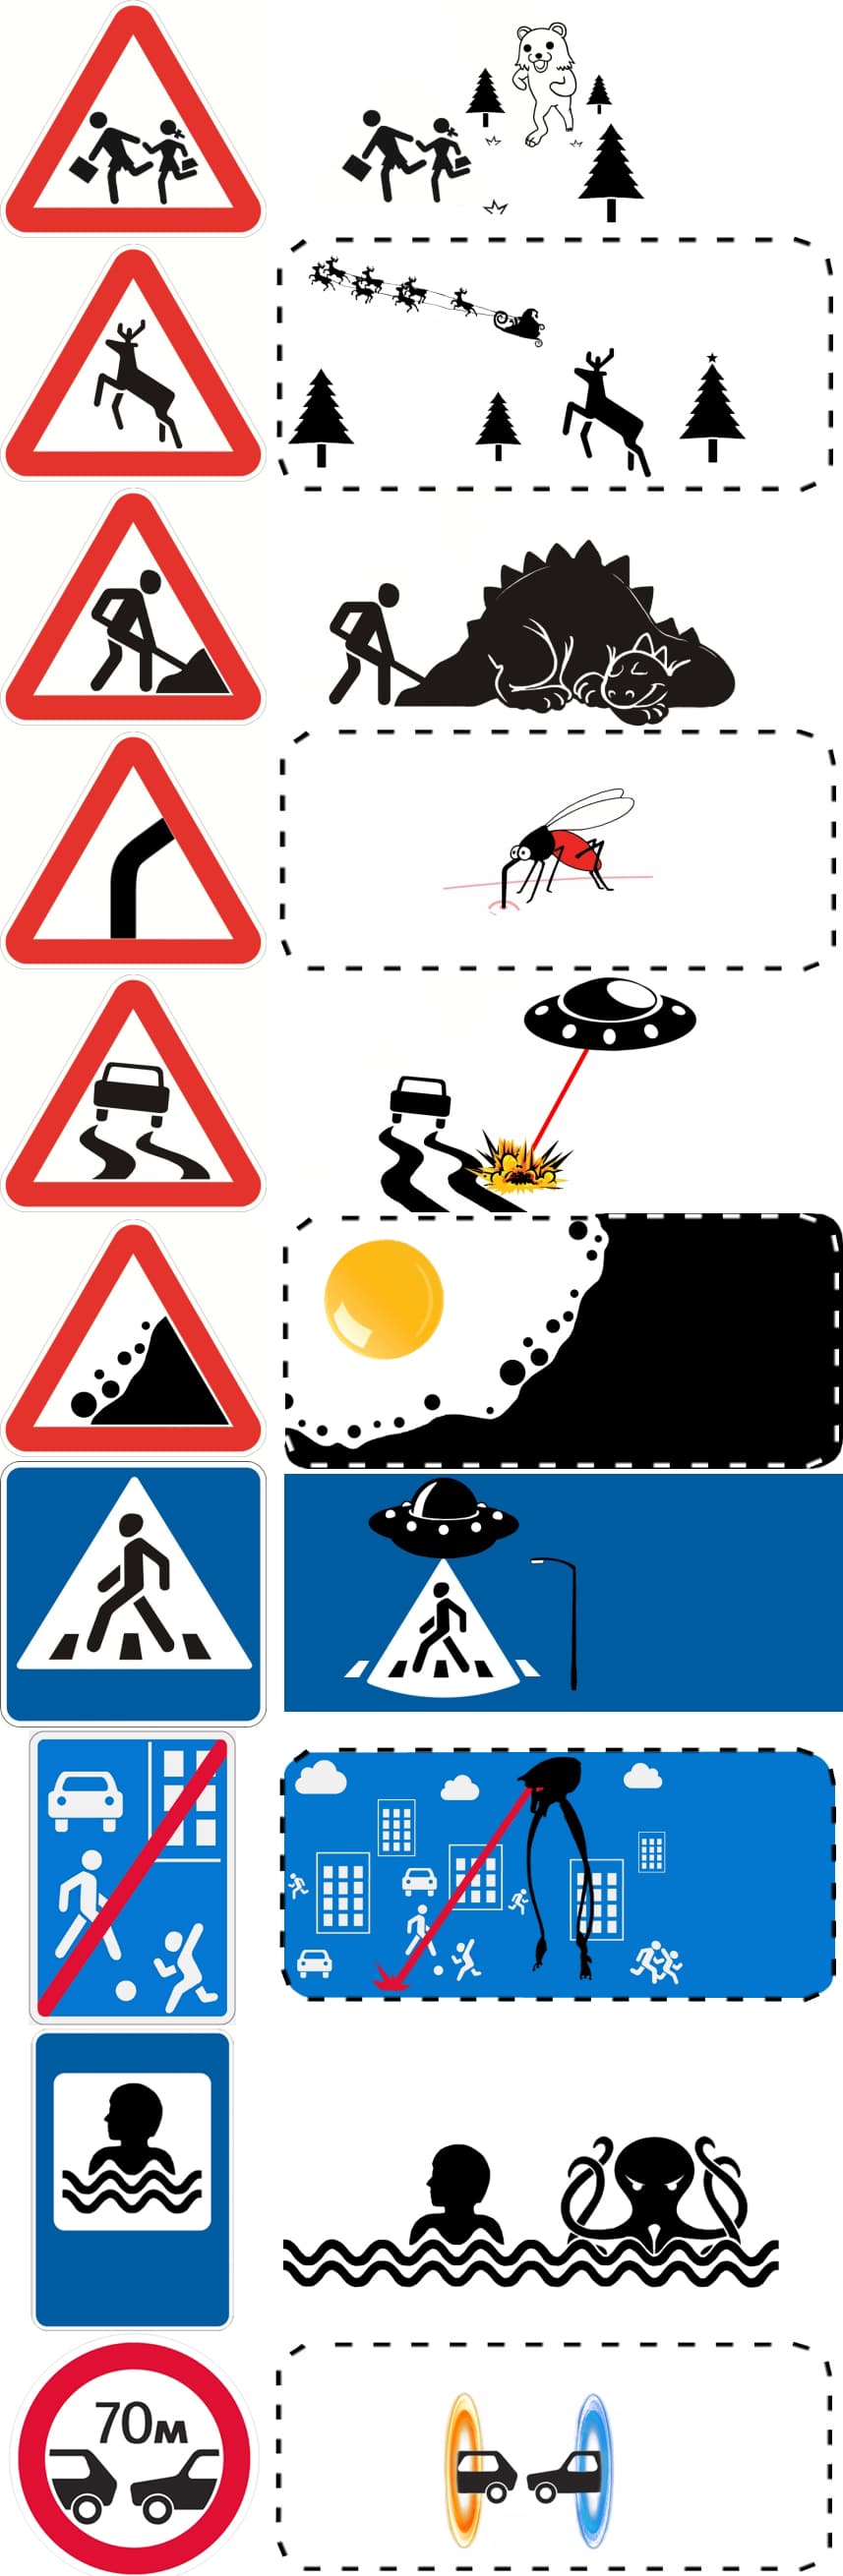 Road Signs Bigger Picture Design